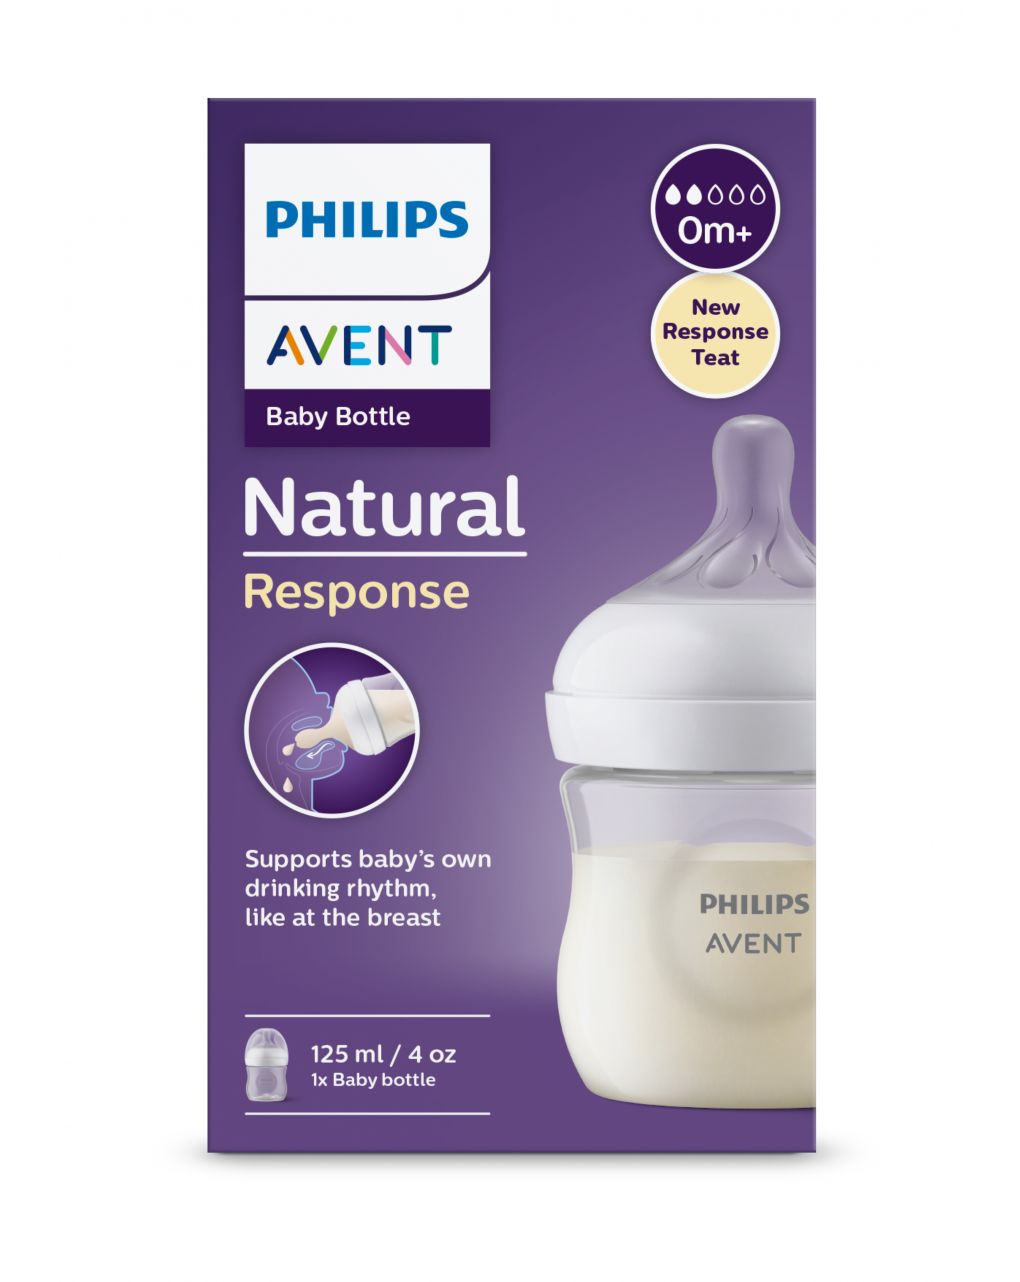 Philips Avent Biberon Natural Response avec valve AirFree - 125 ml